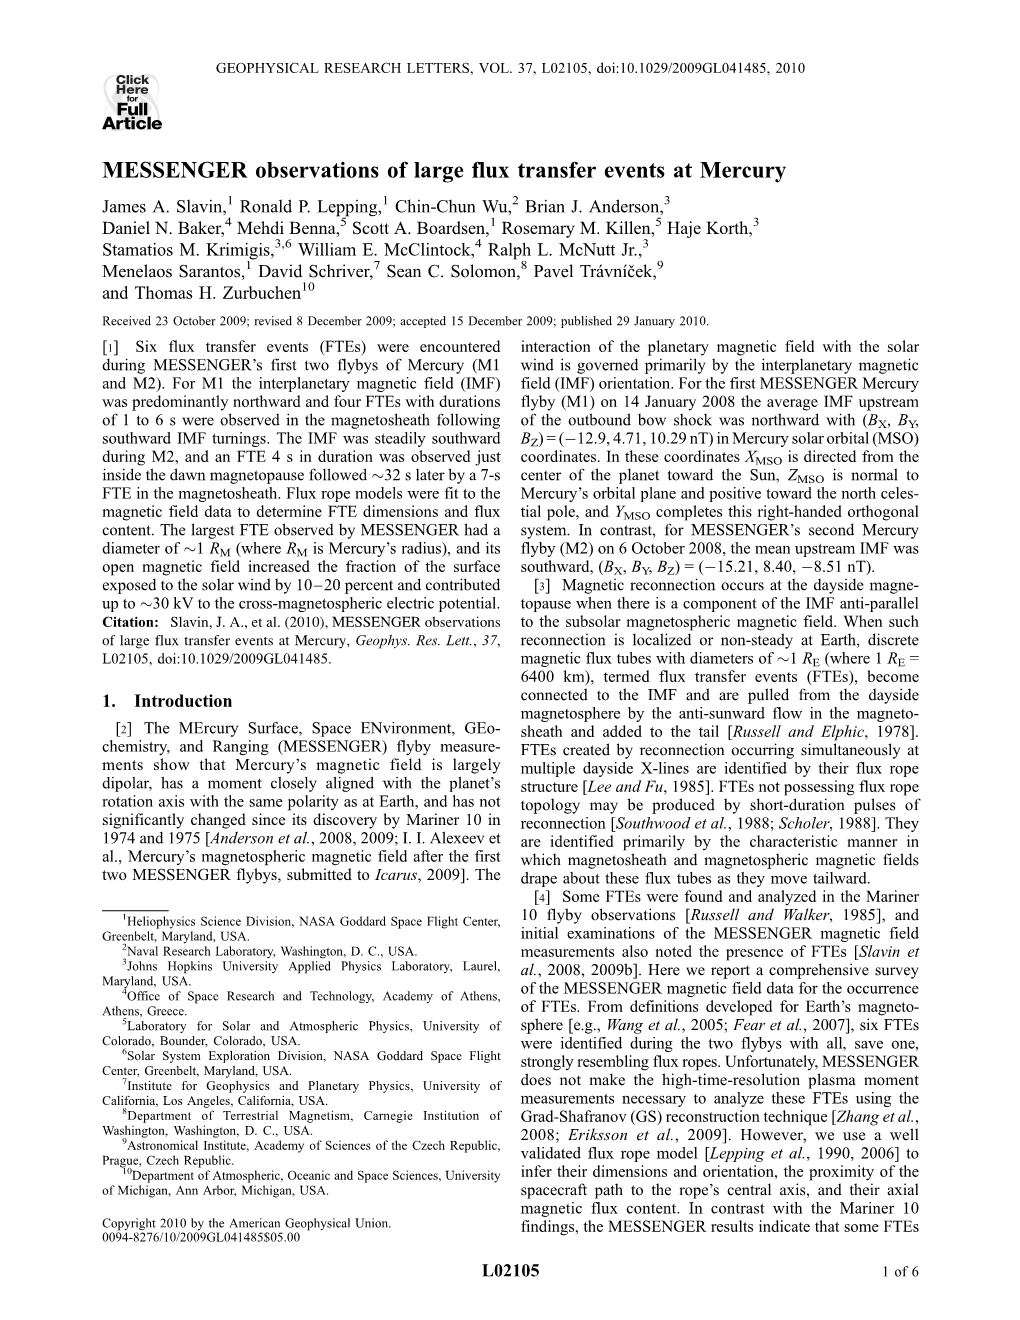 MESSENGER Observations of Large Flux Transfer Events at Mercury James A